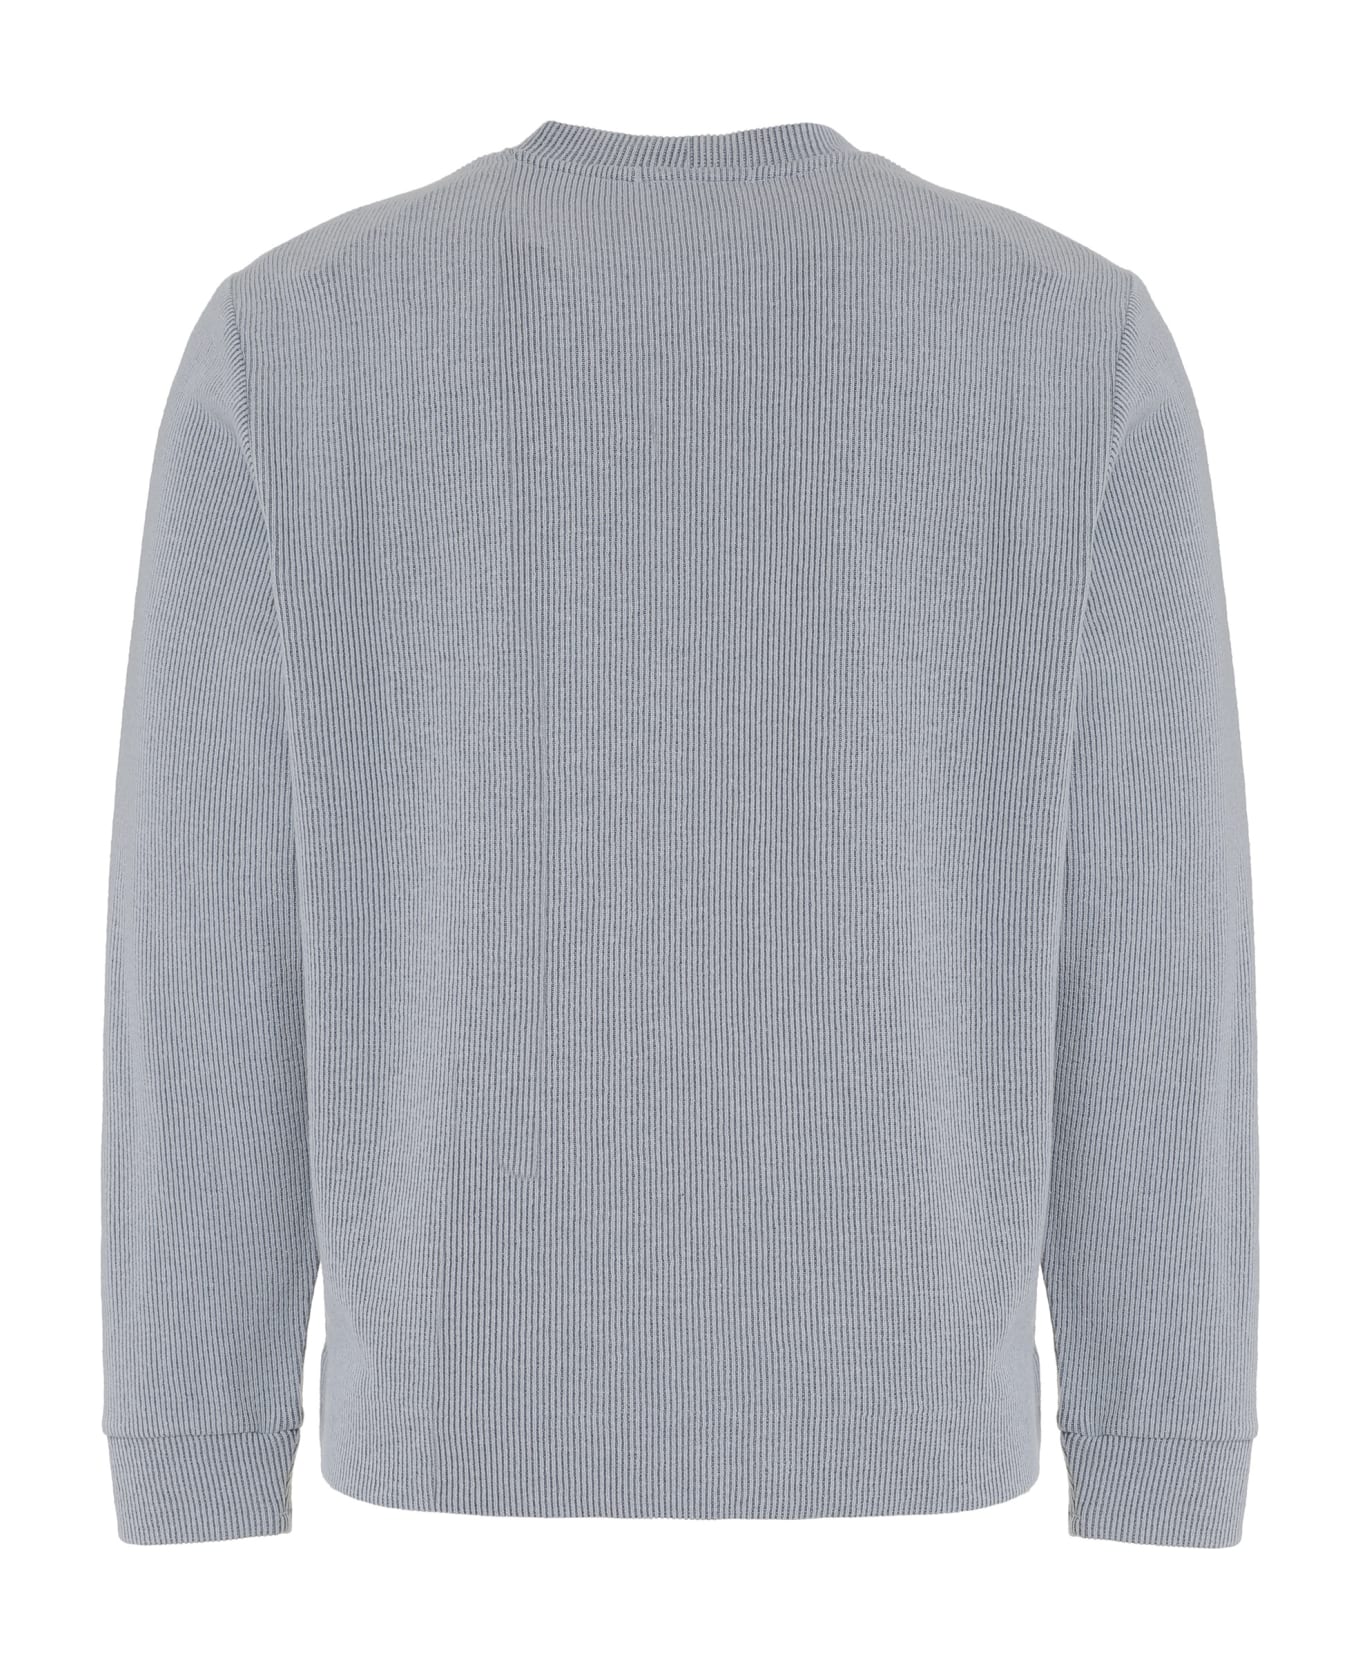 Stone Island Cotton Blend Crew-neck Sweater - Light Blue ニットウェア